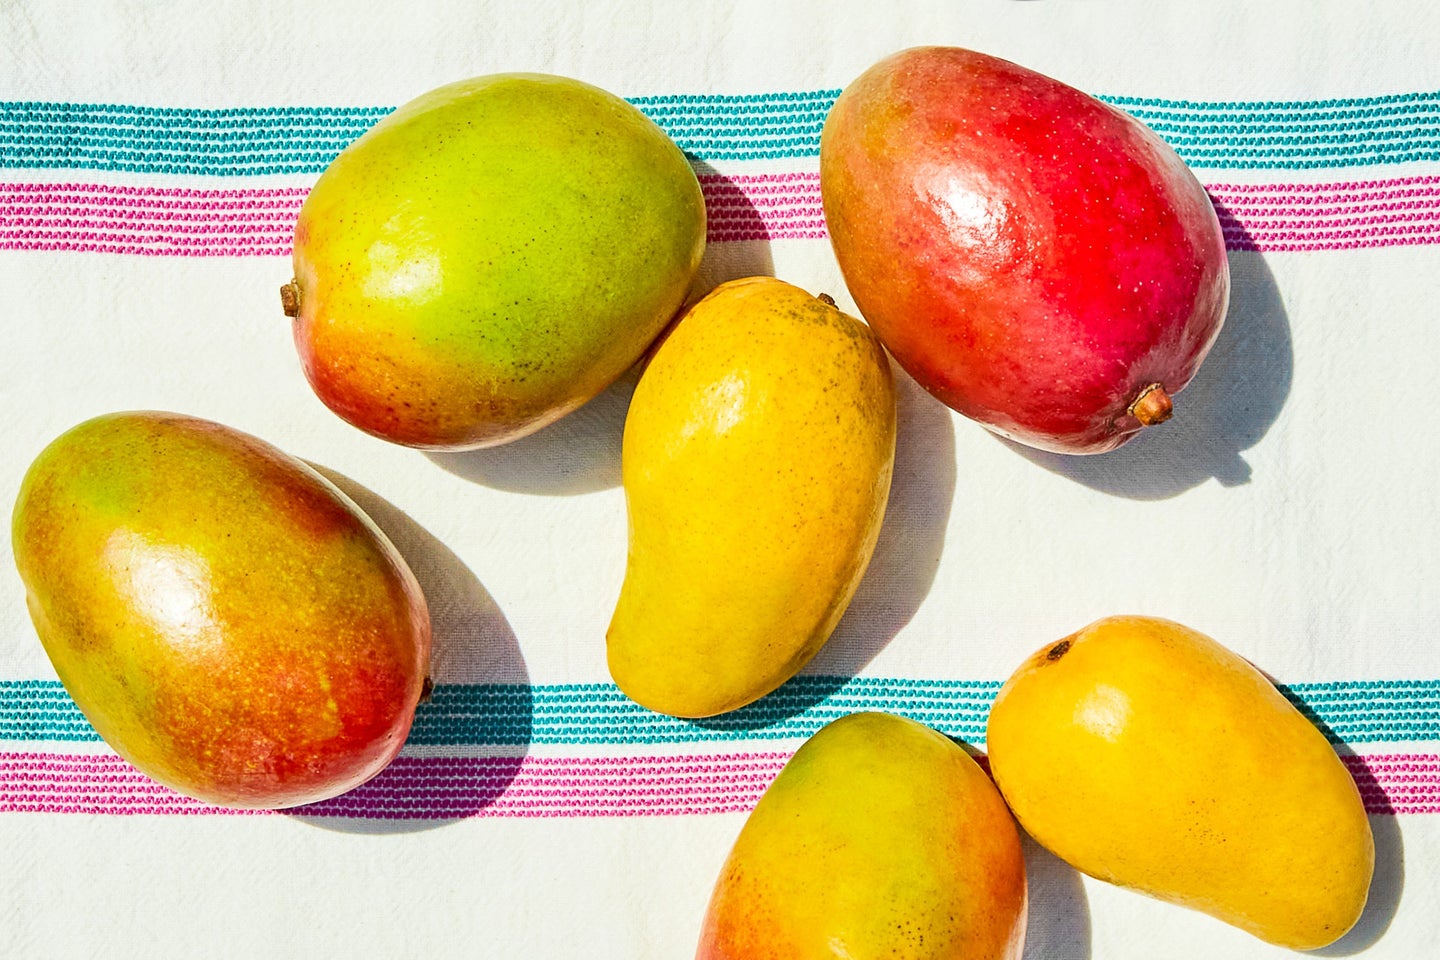 Mango Varieties on White Cloth